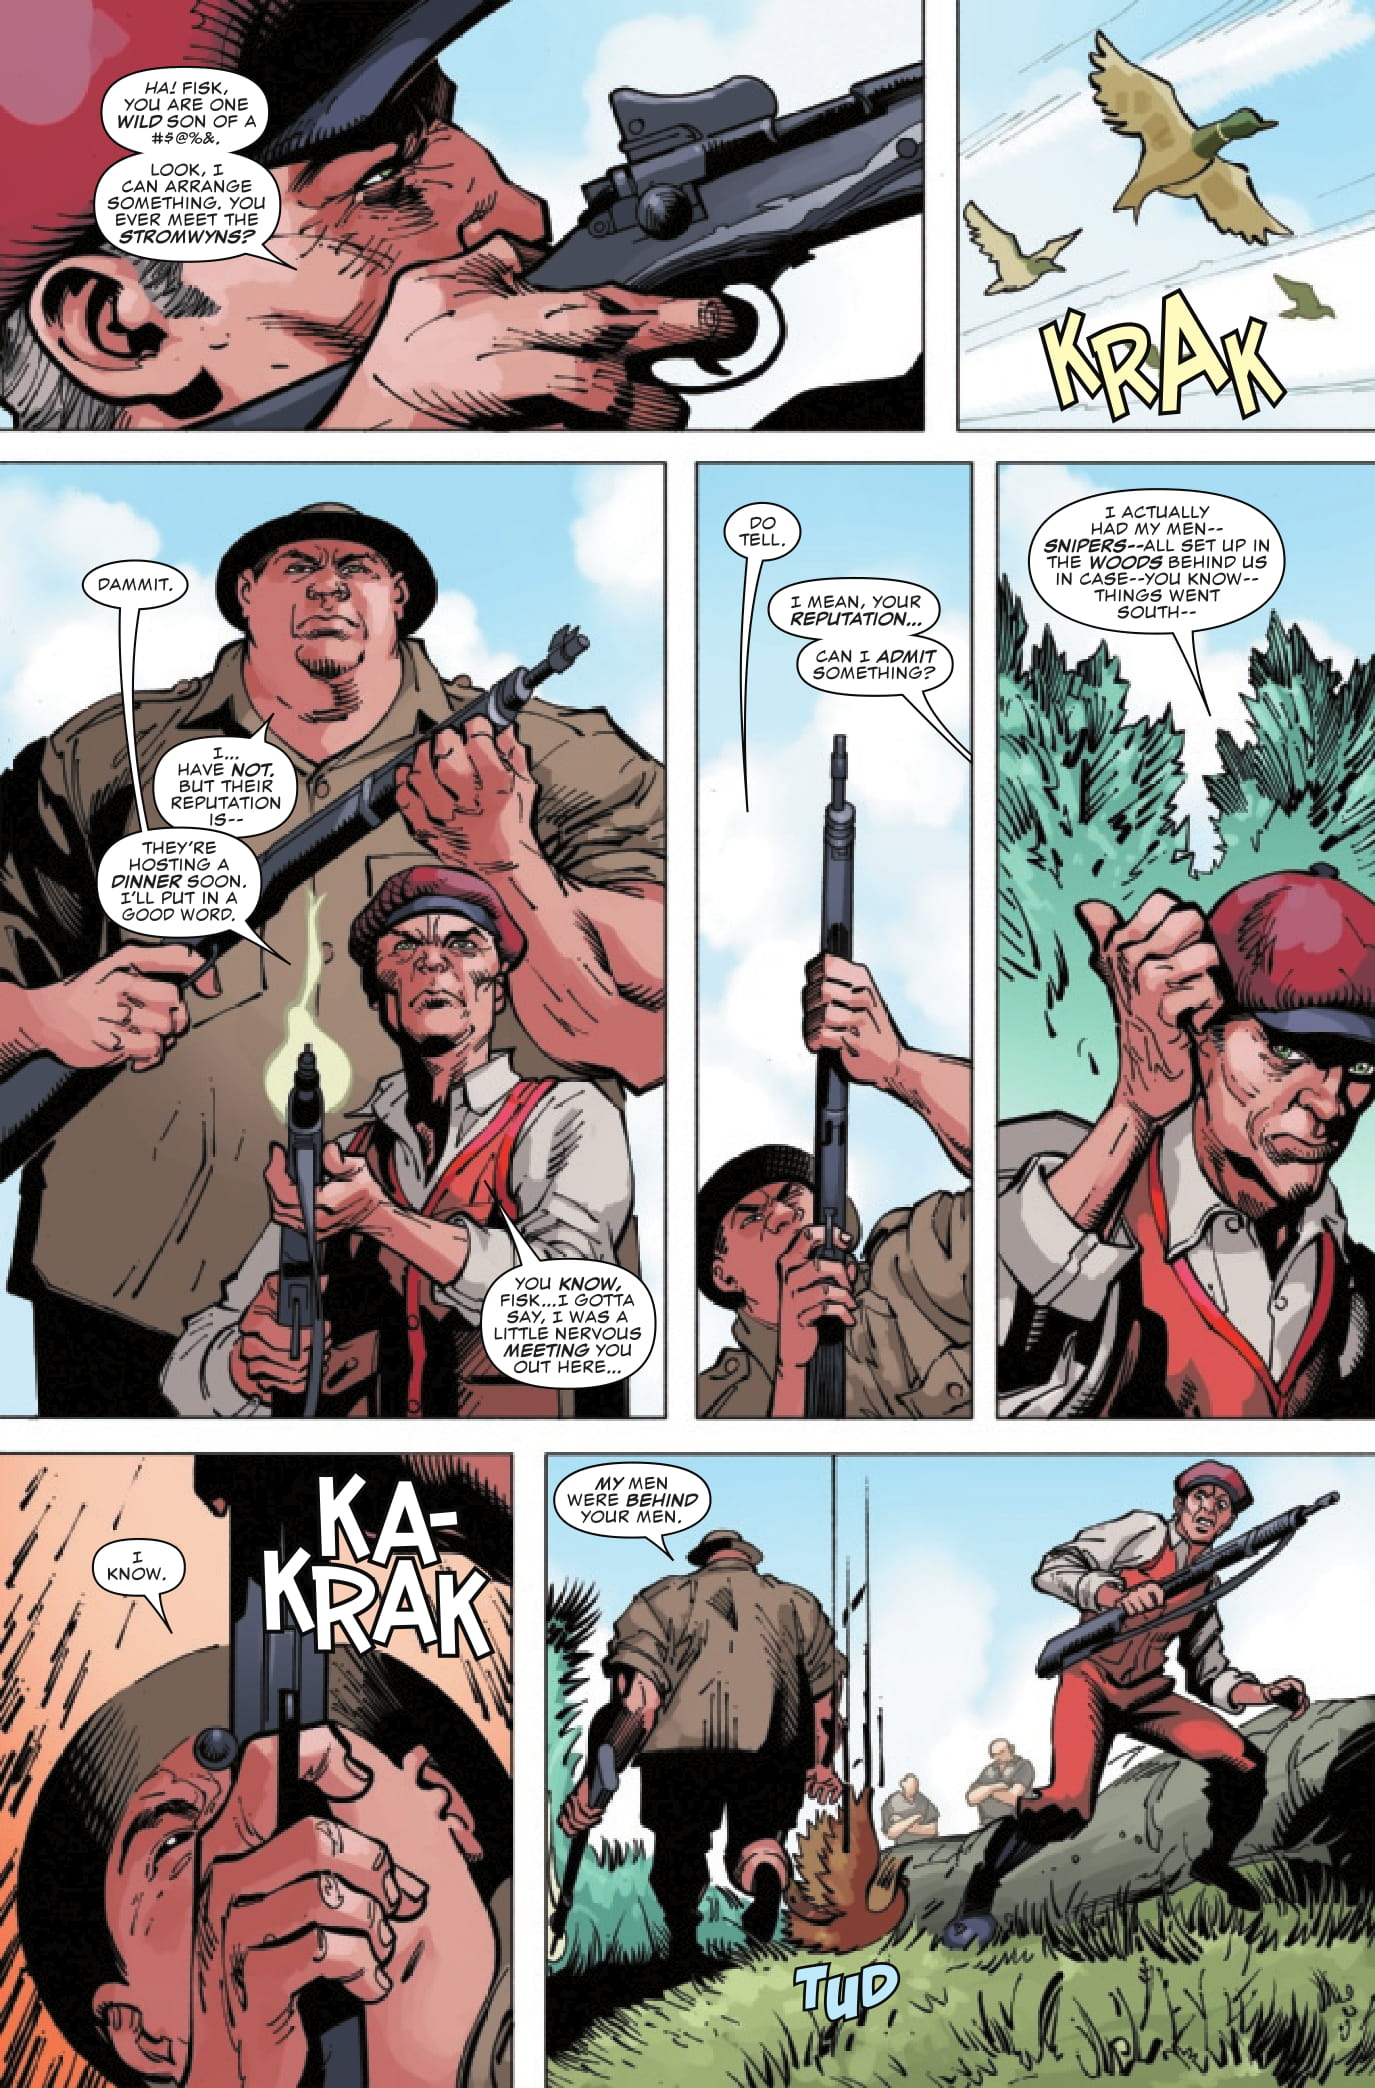 Daredevil #8 preview page 5